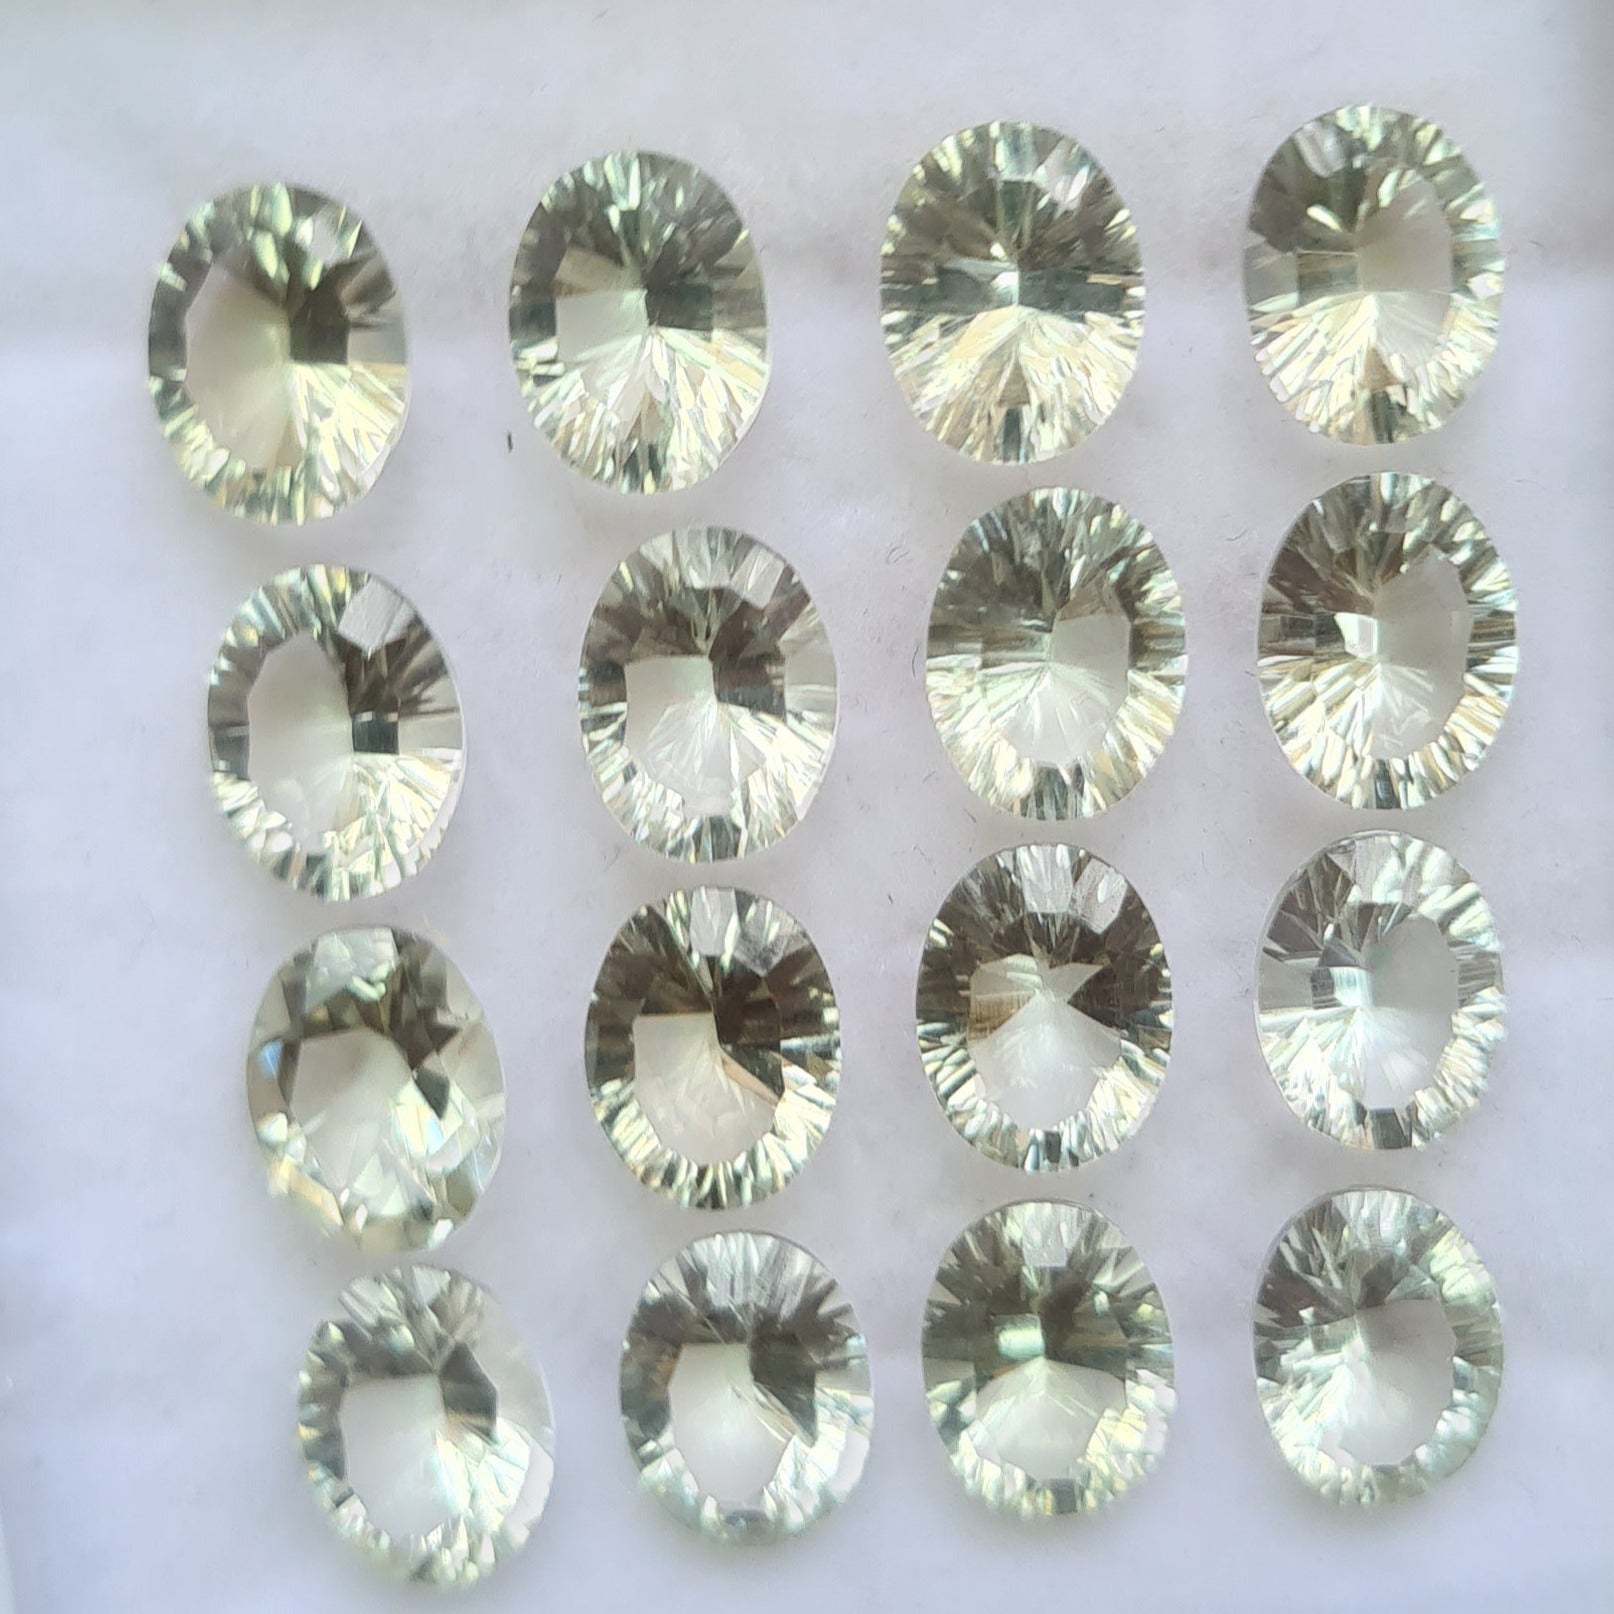 16 Pcs Natural Green Amethyst Faceted Gemstone 9x7mm Oval Shape - The LabradoriteKing